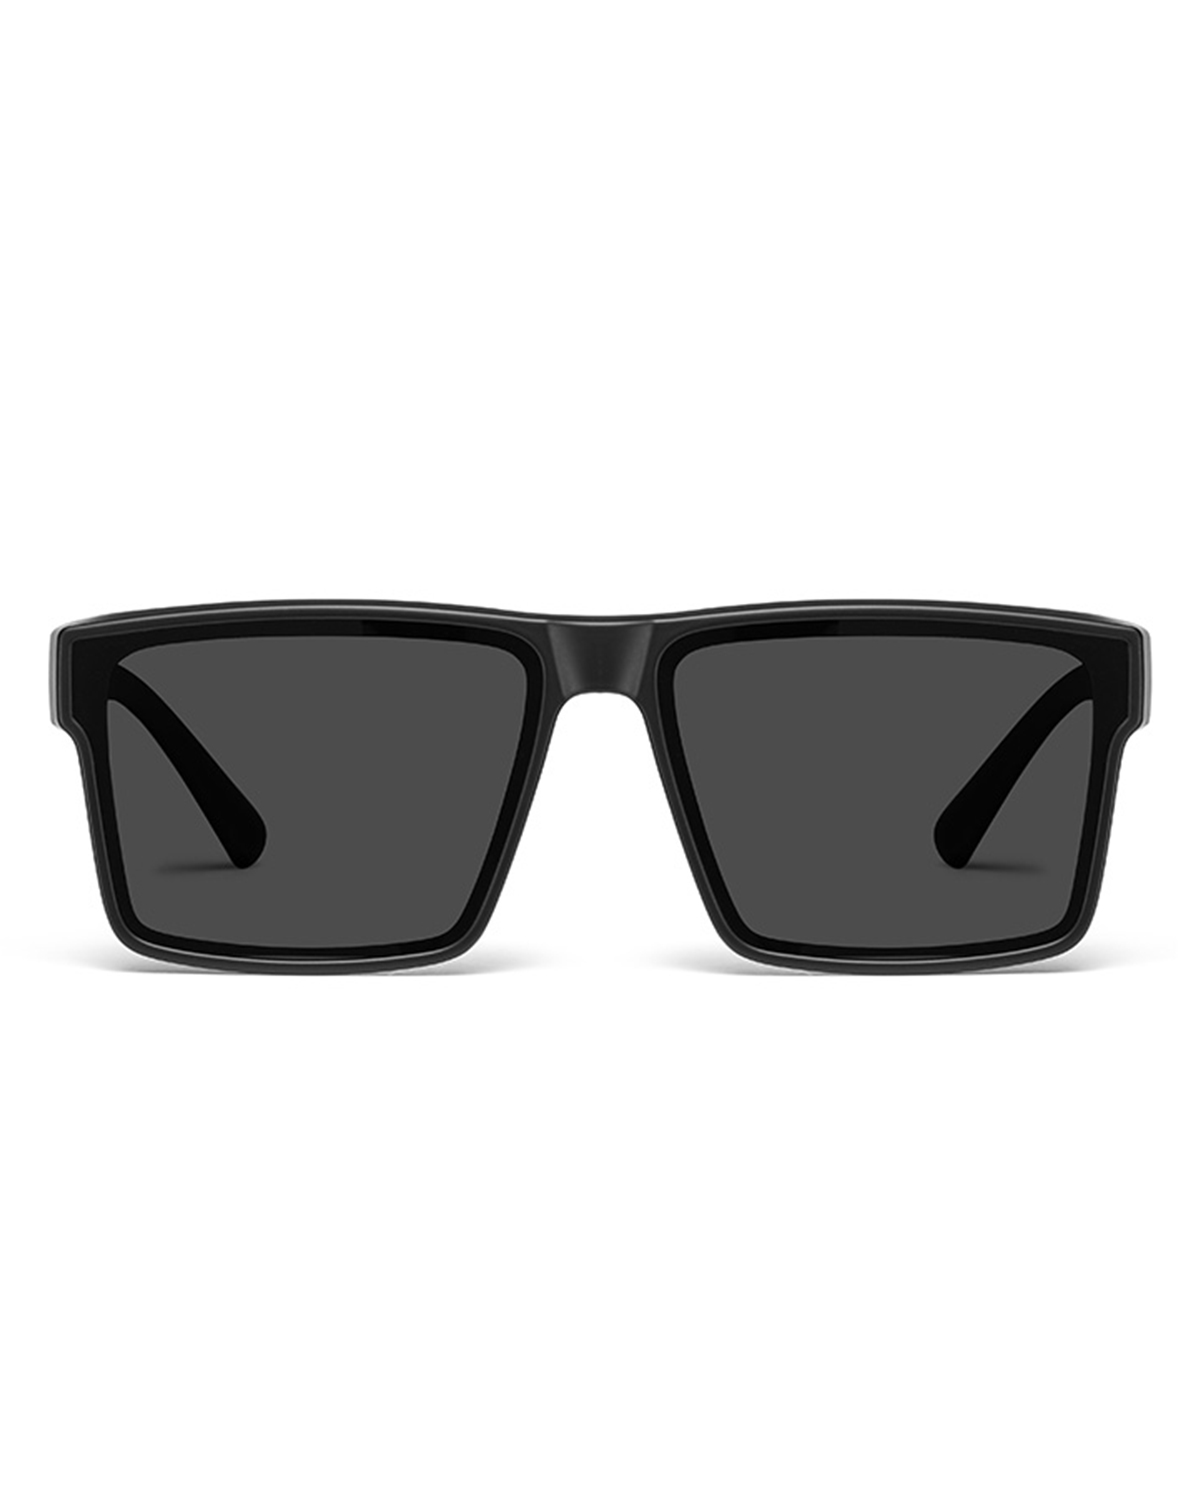 Fit Over Glasses Sunglasses #SG003-TERAISE